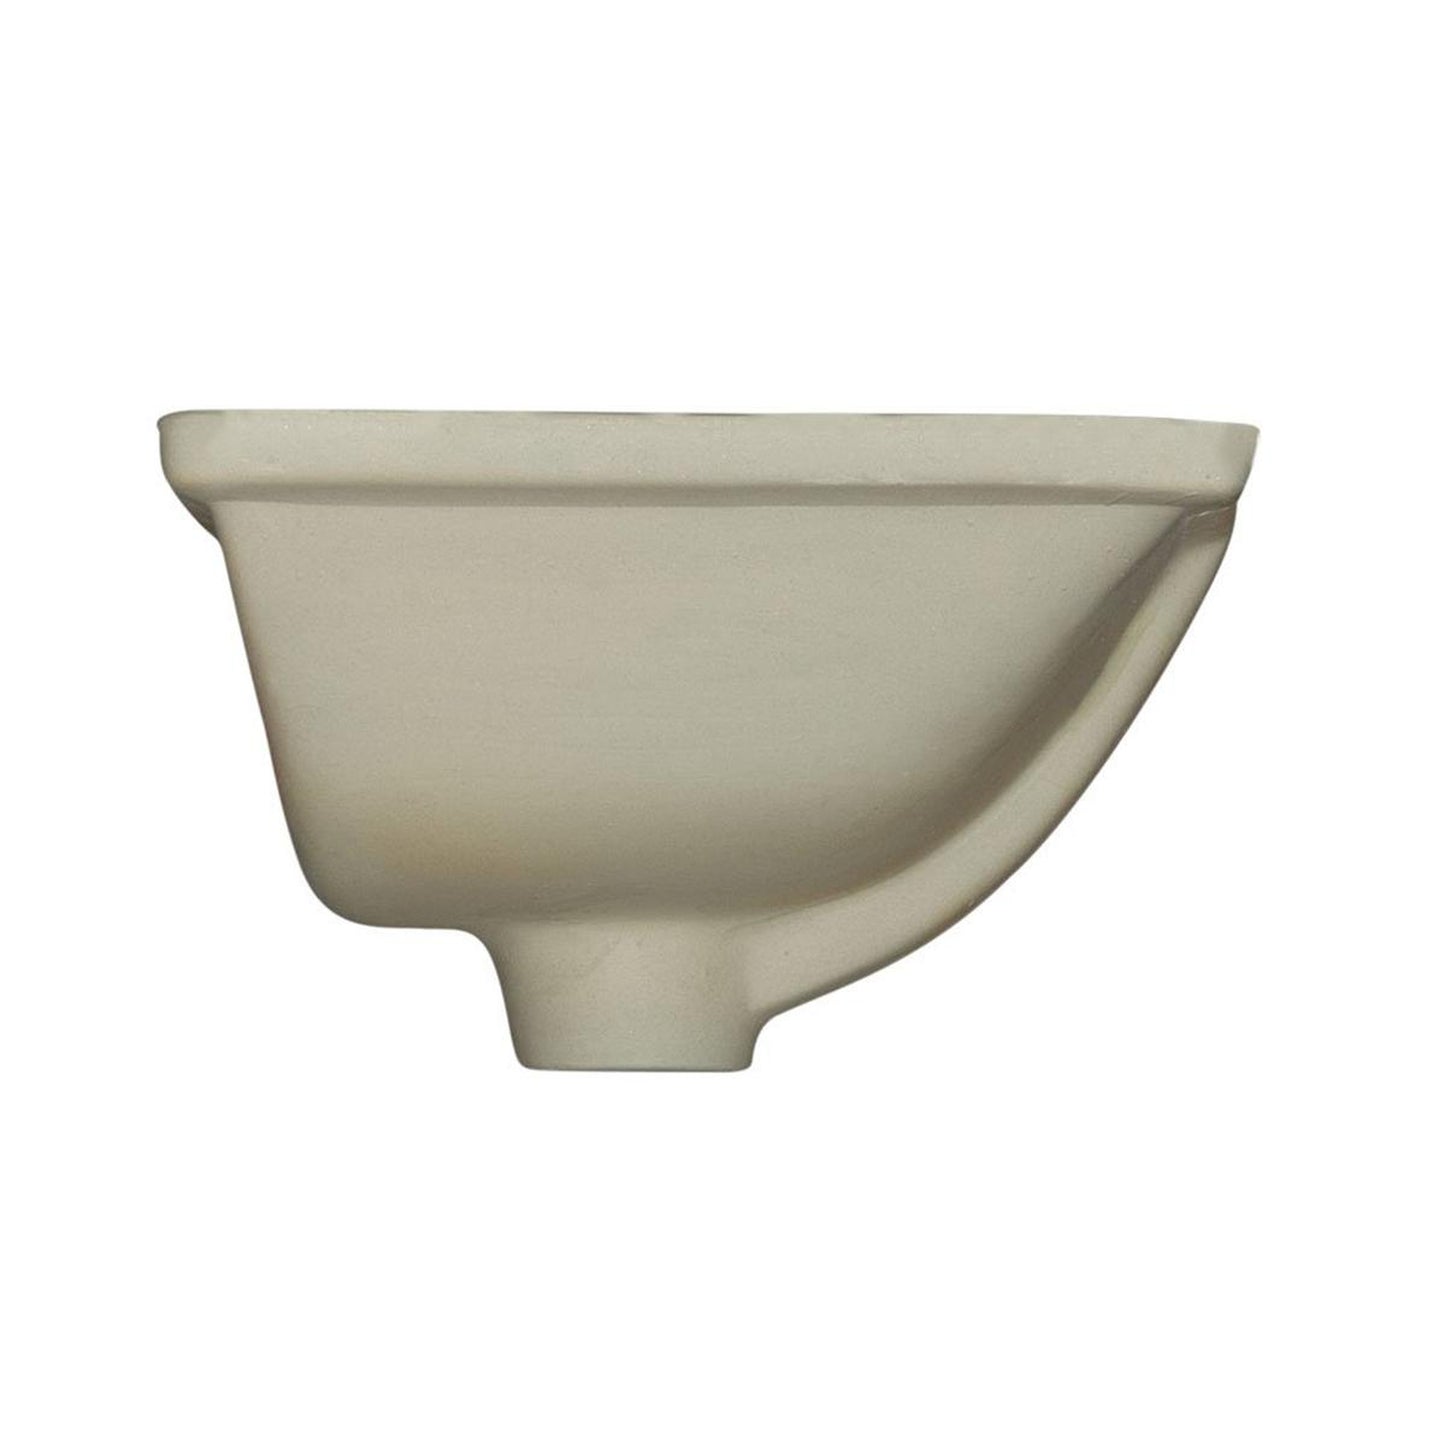 Pelican Int'l Pearl Series PL-3088 16" x 11" White Porcelain Undermount Bathroom Sink